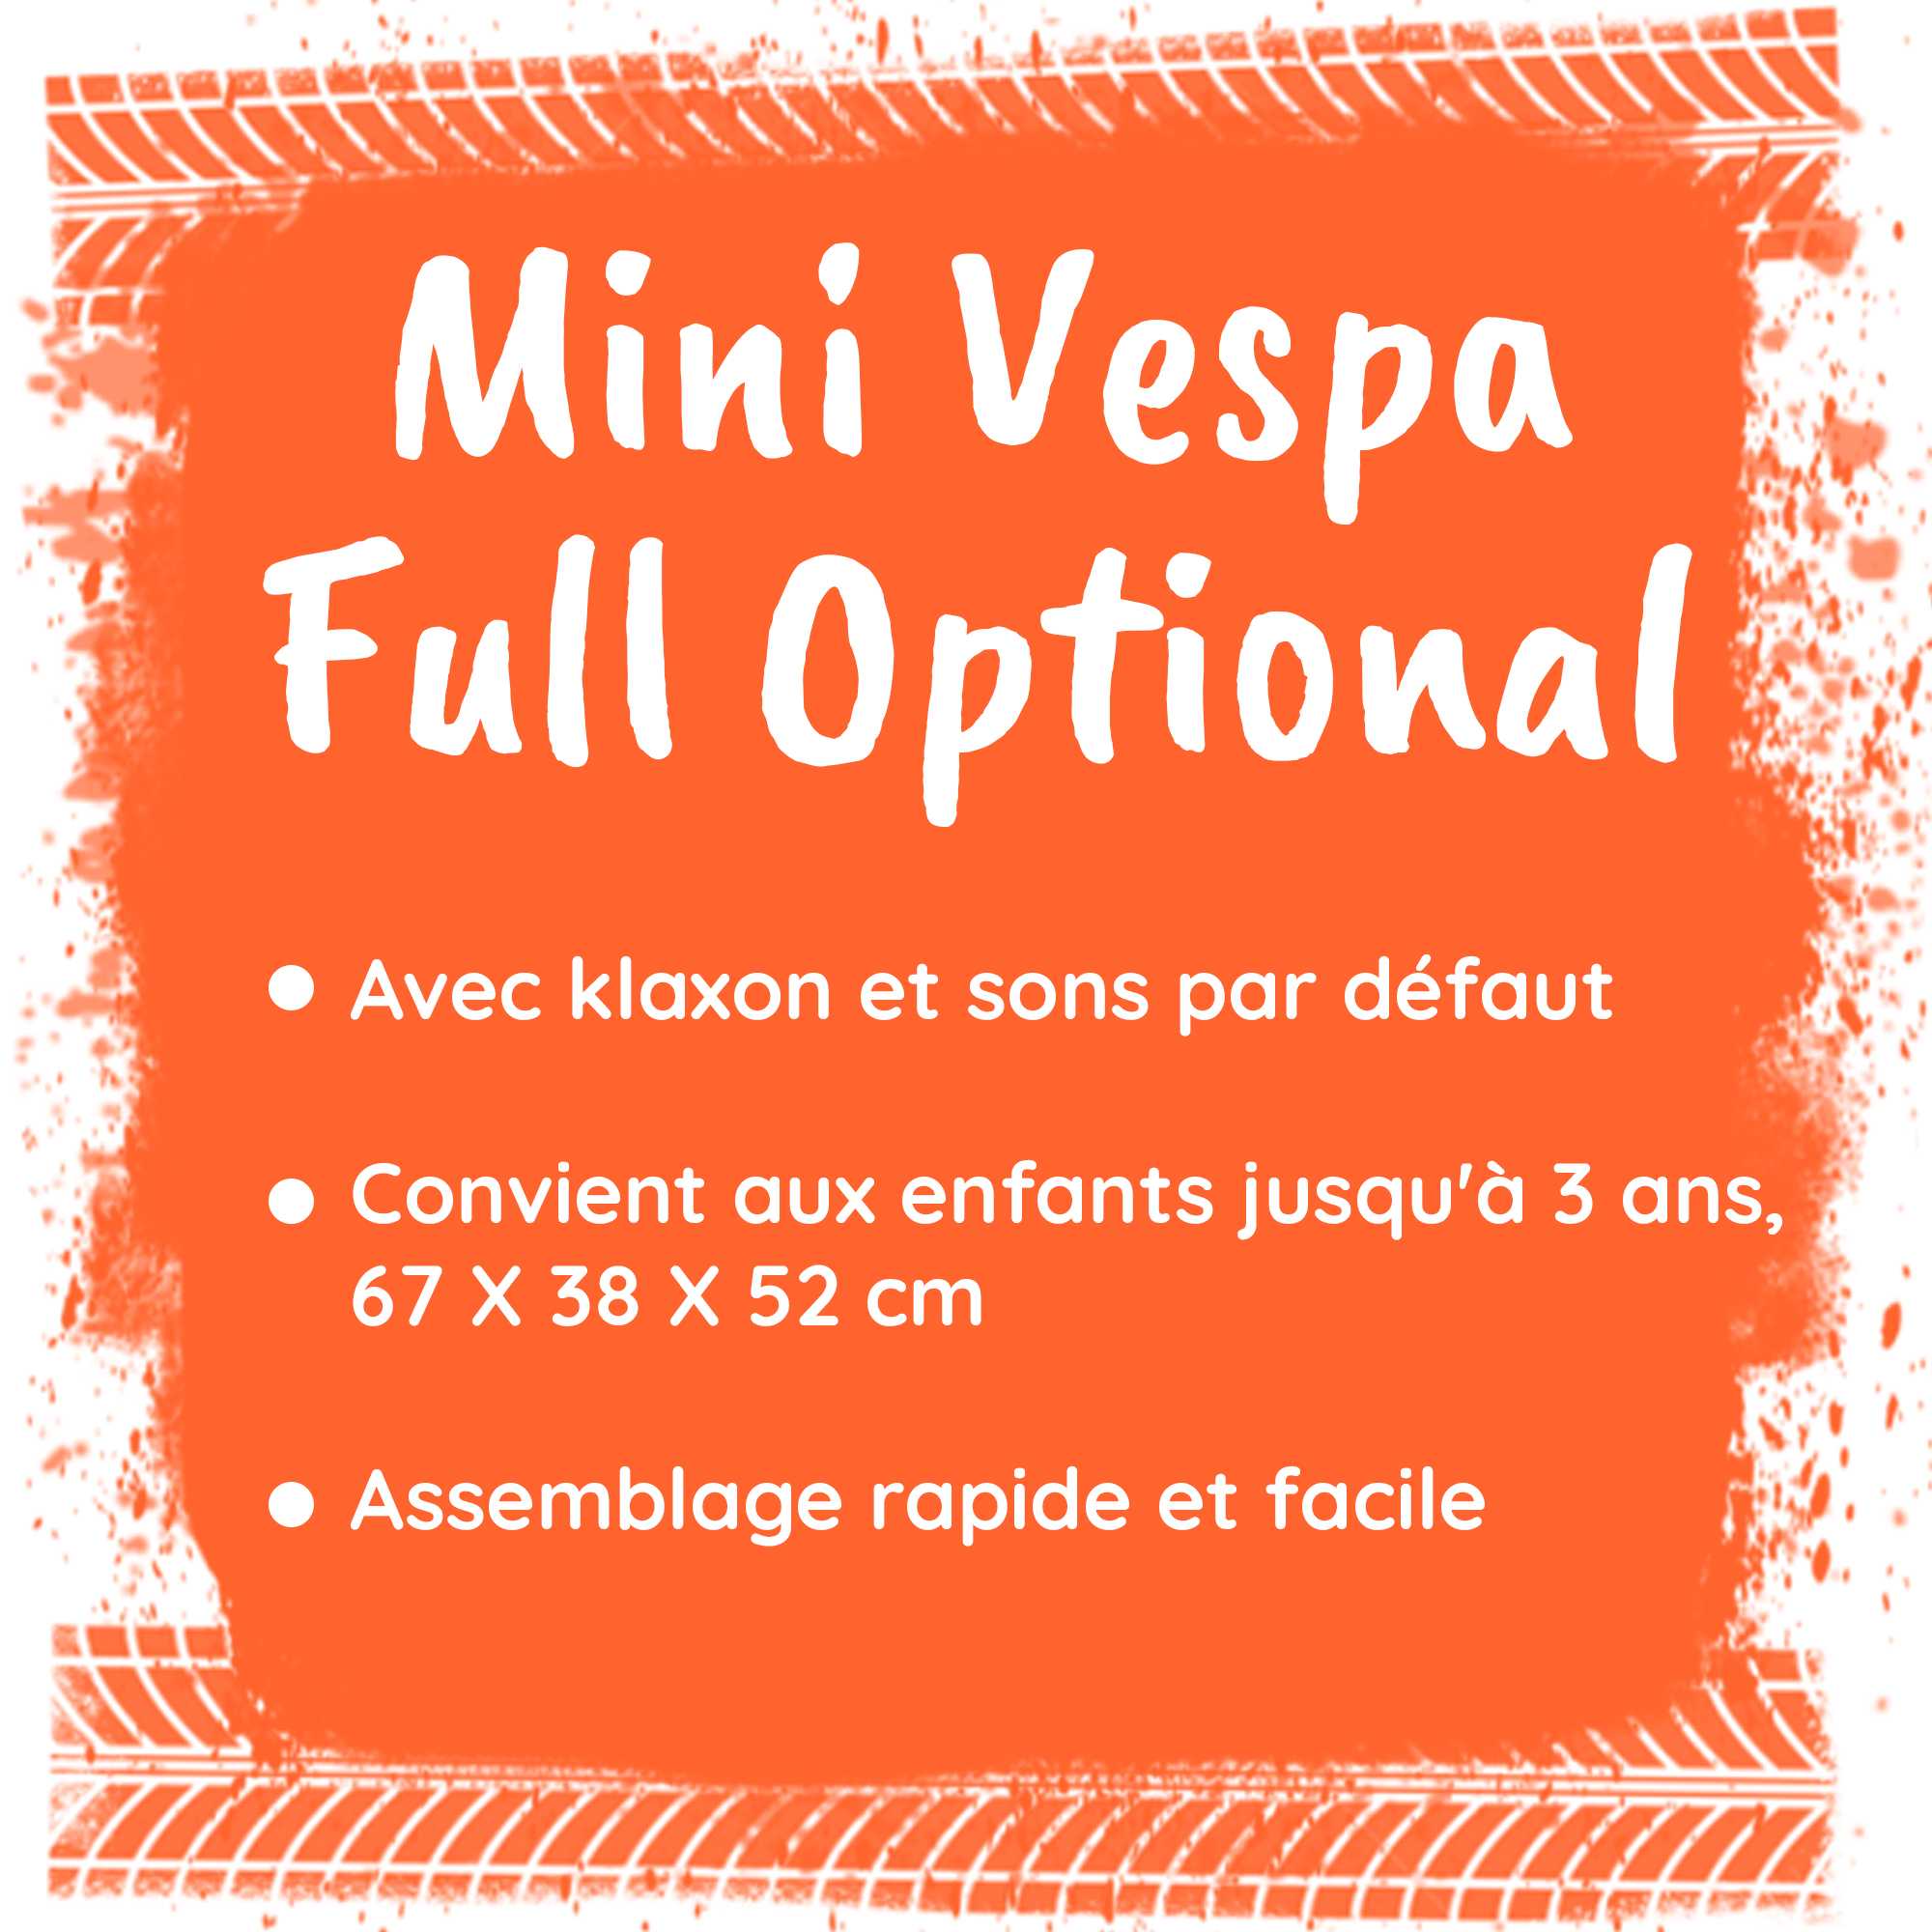 Mini Vespa full optional